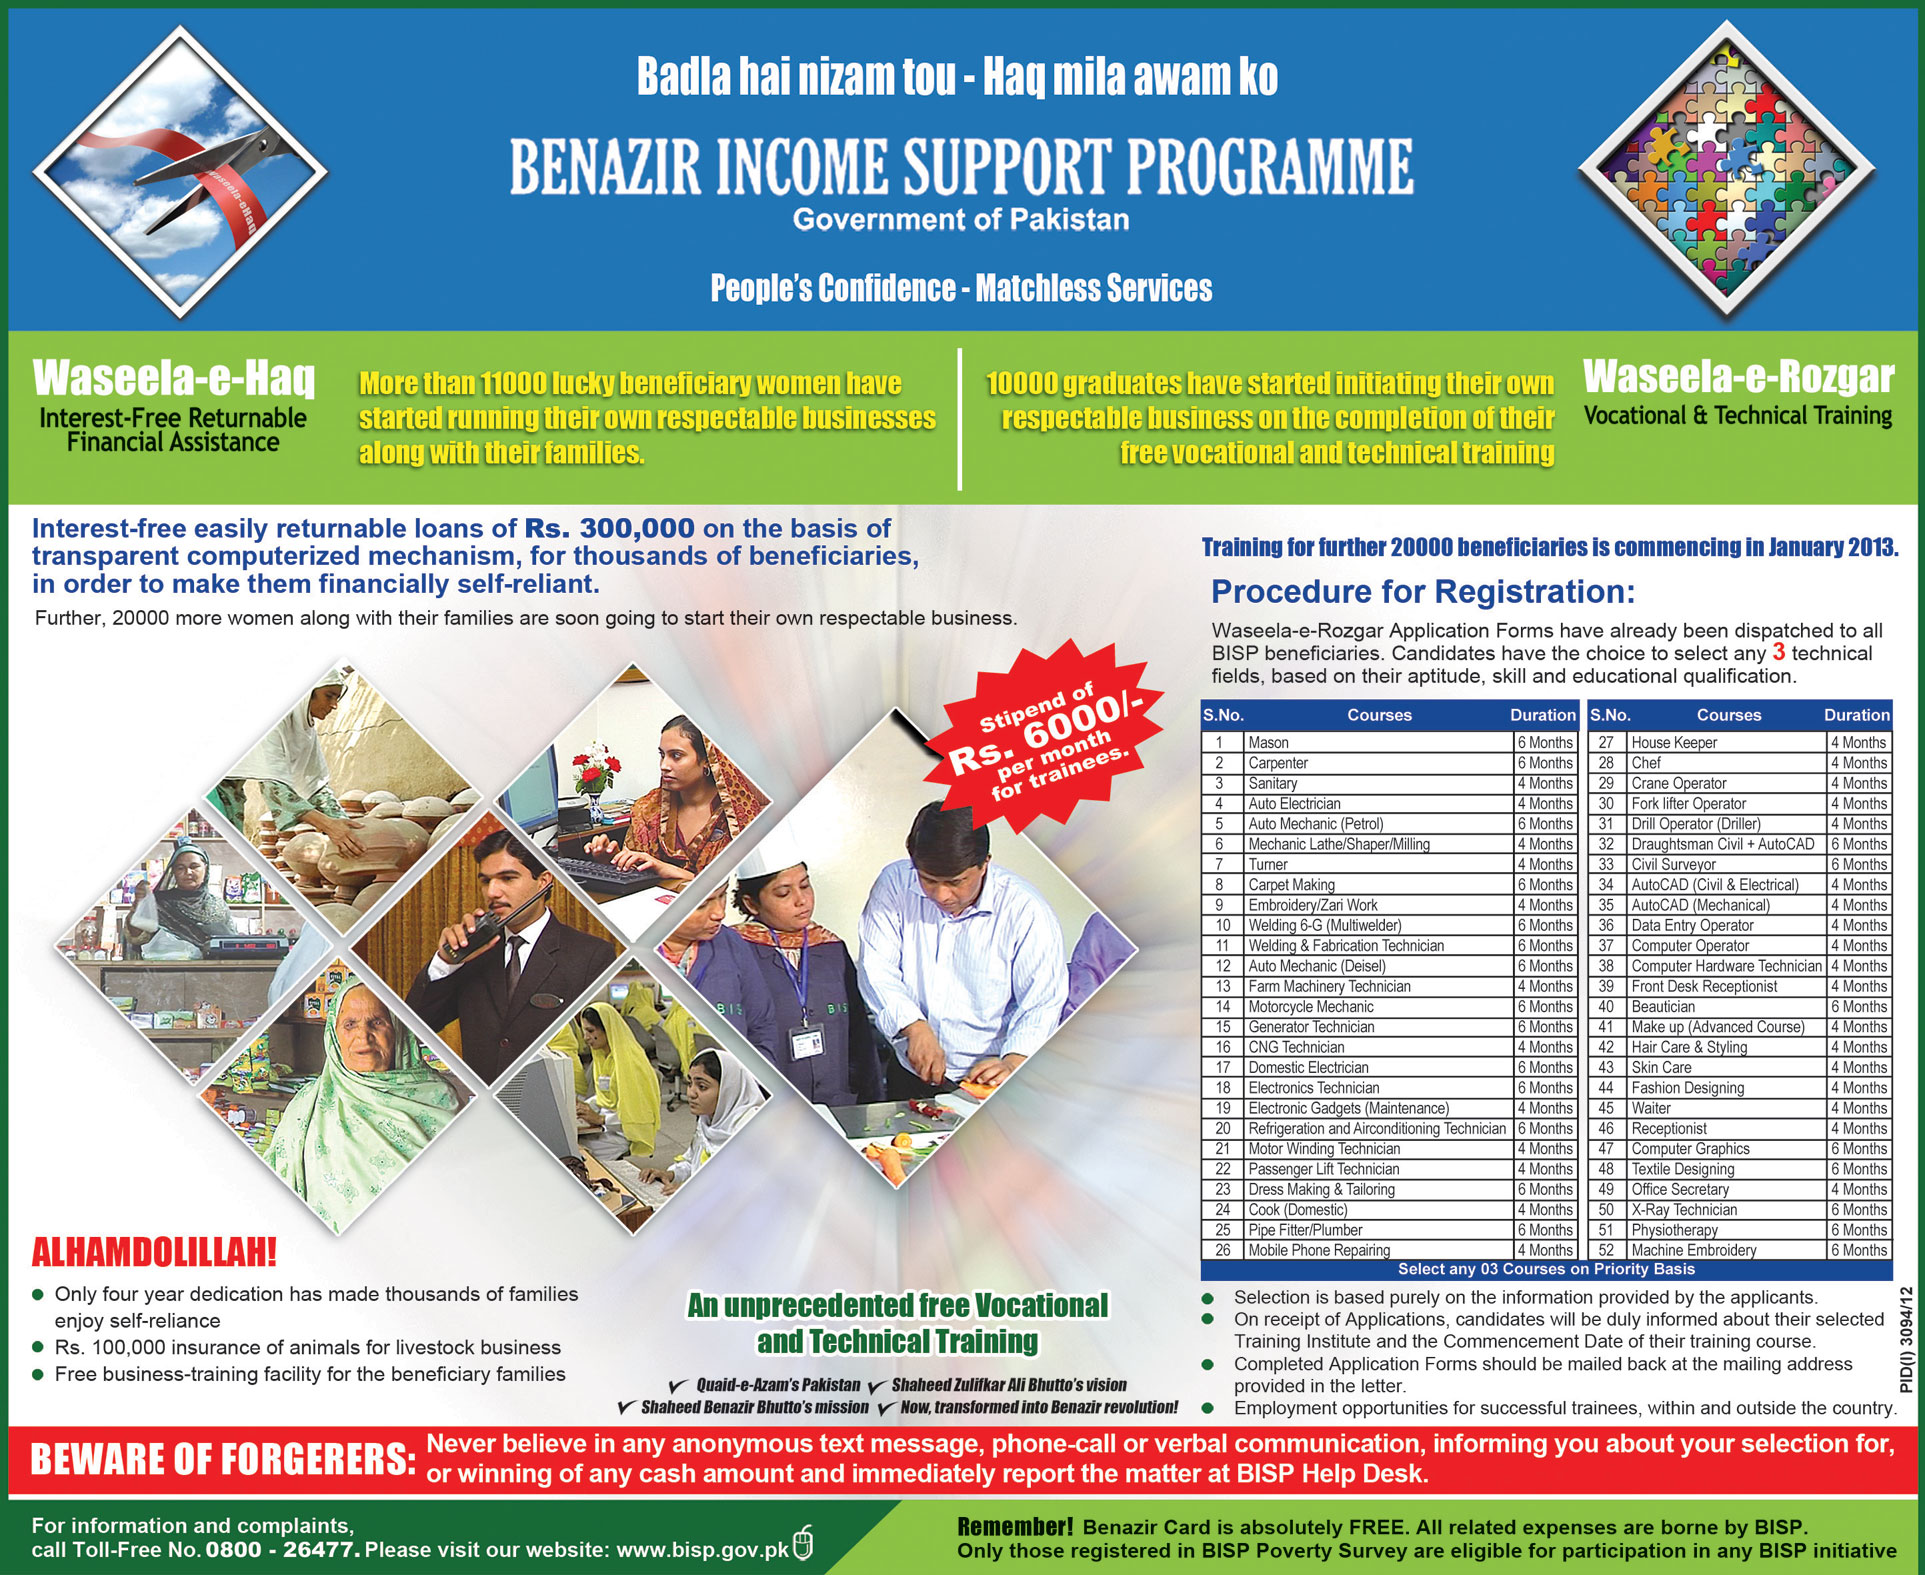 BISP Waseela-e-Rozgar 2013 Registration - Free Vocational & Technical Training